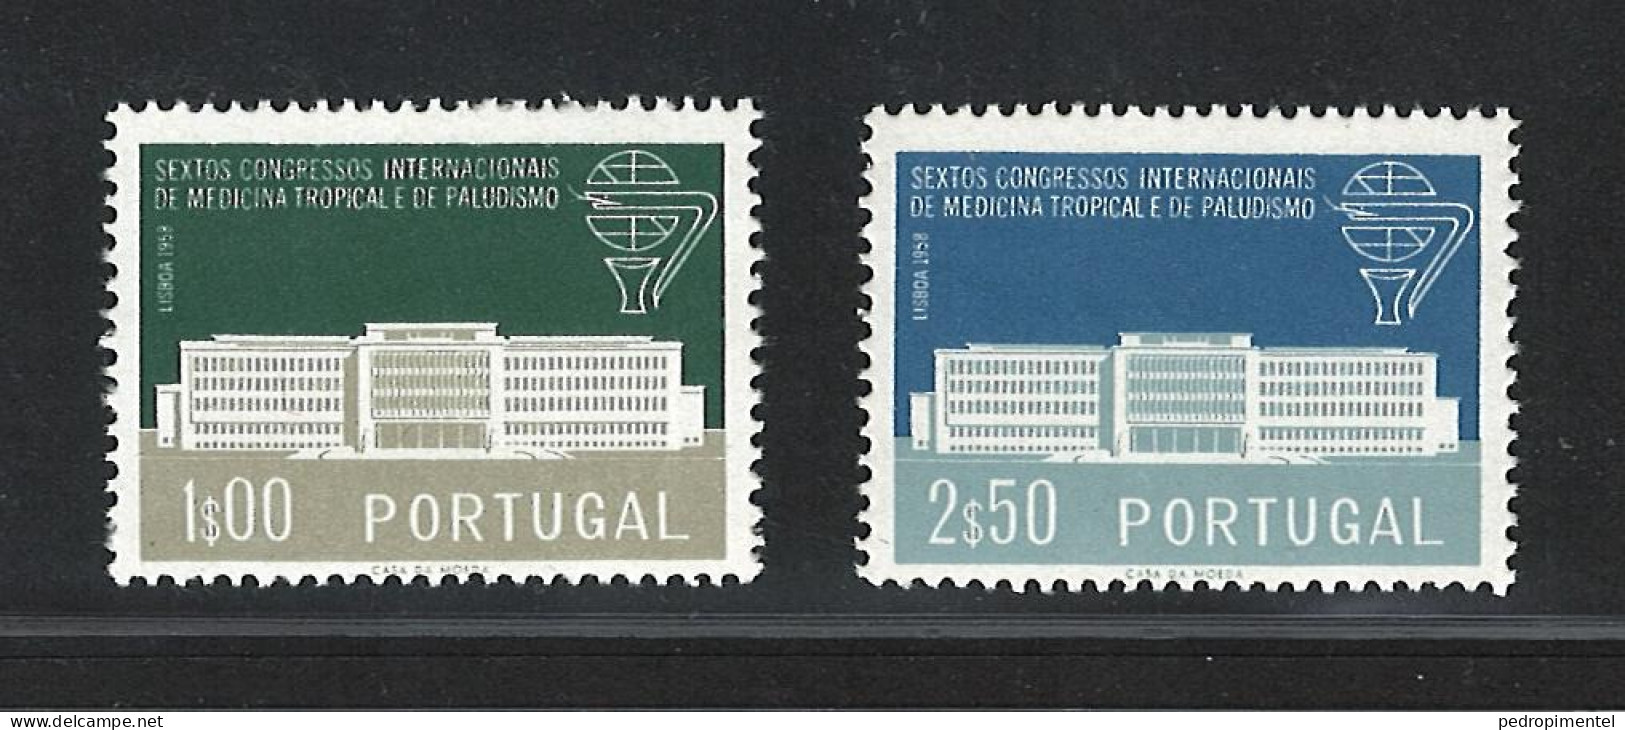 Portugal Stamps 1958 "Tropical Medicine Congress" Condition MNH #839-840 - Nuevos